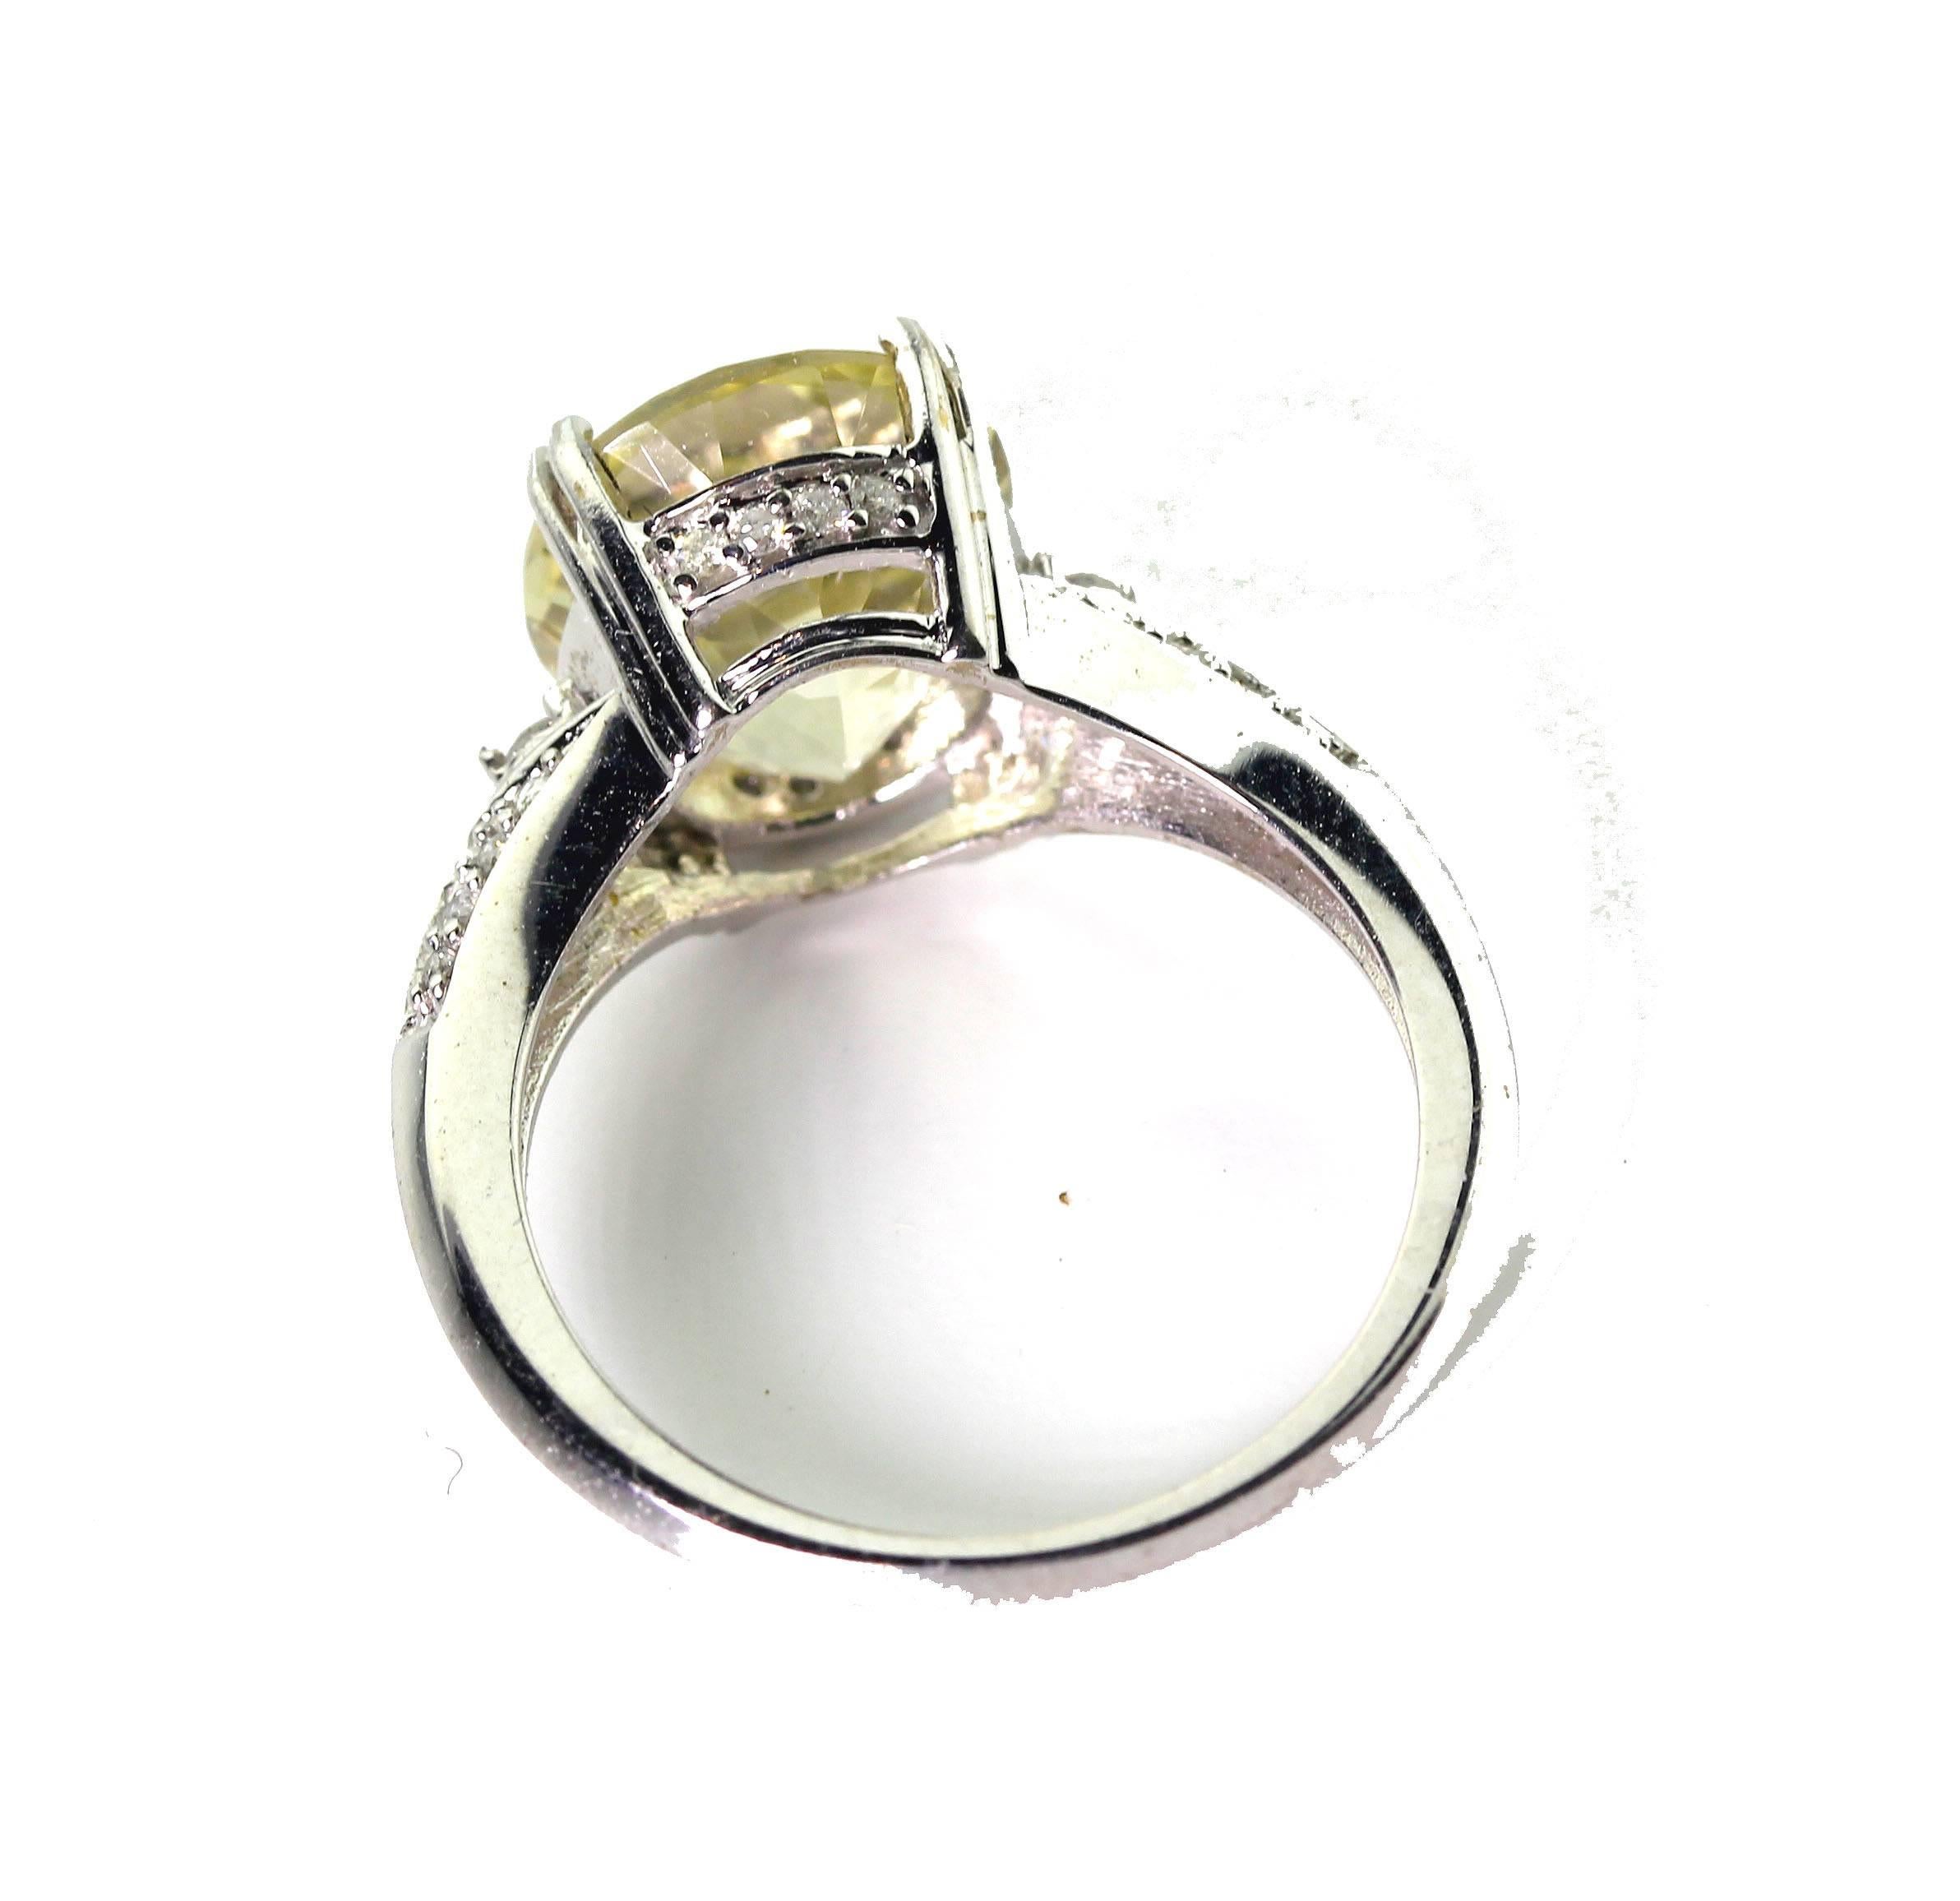 AJD Unique White Diamonds Enhance this 4 Cts Yellow Labradorite Gold Ring 1